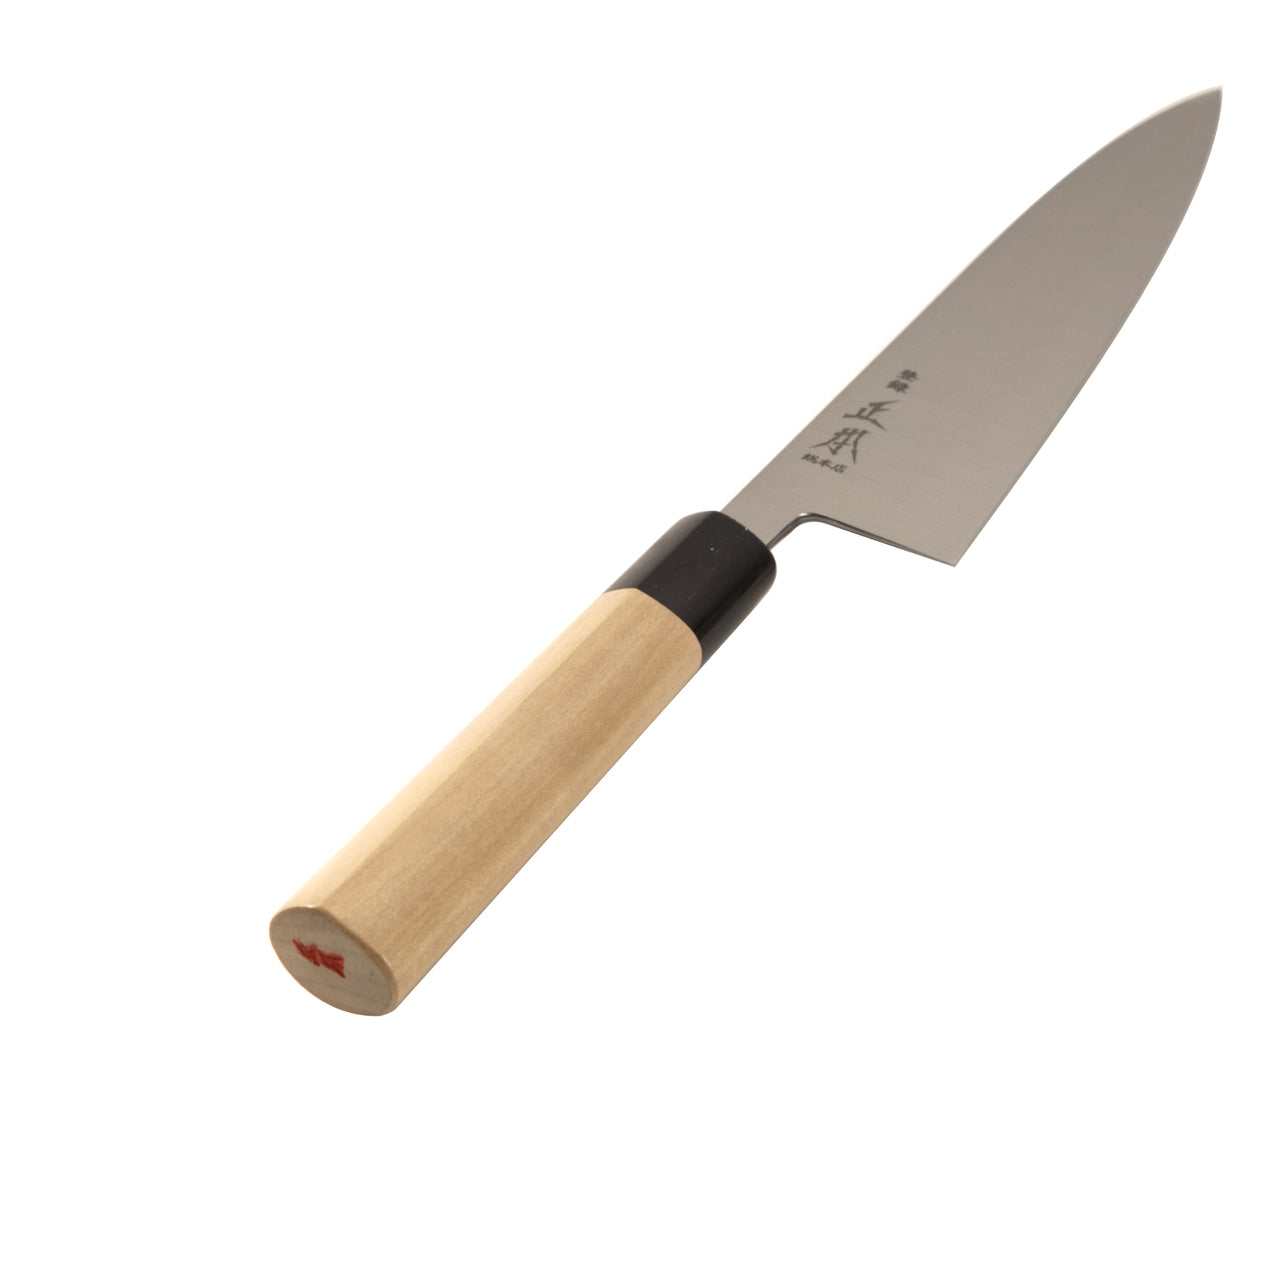 Buy Matsato Knife - Official 70% Discount Short Time